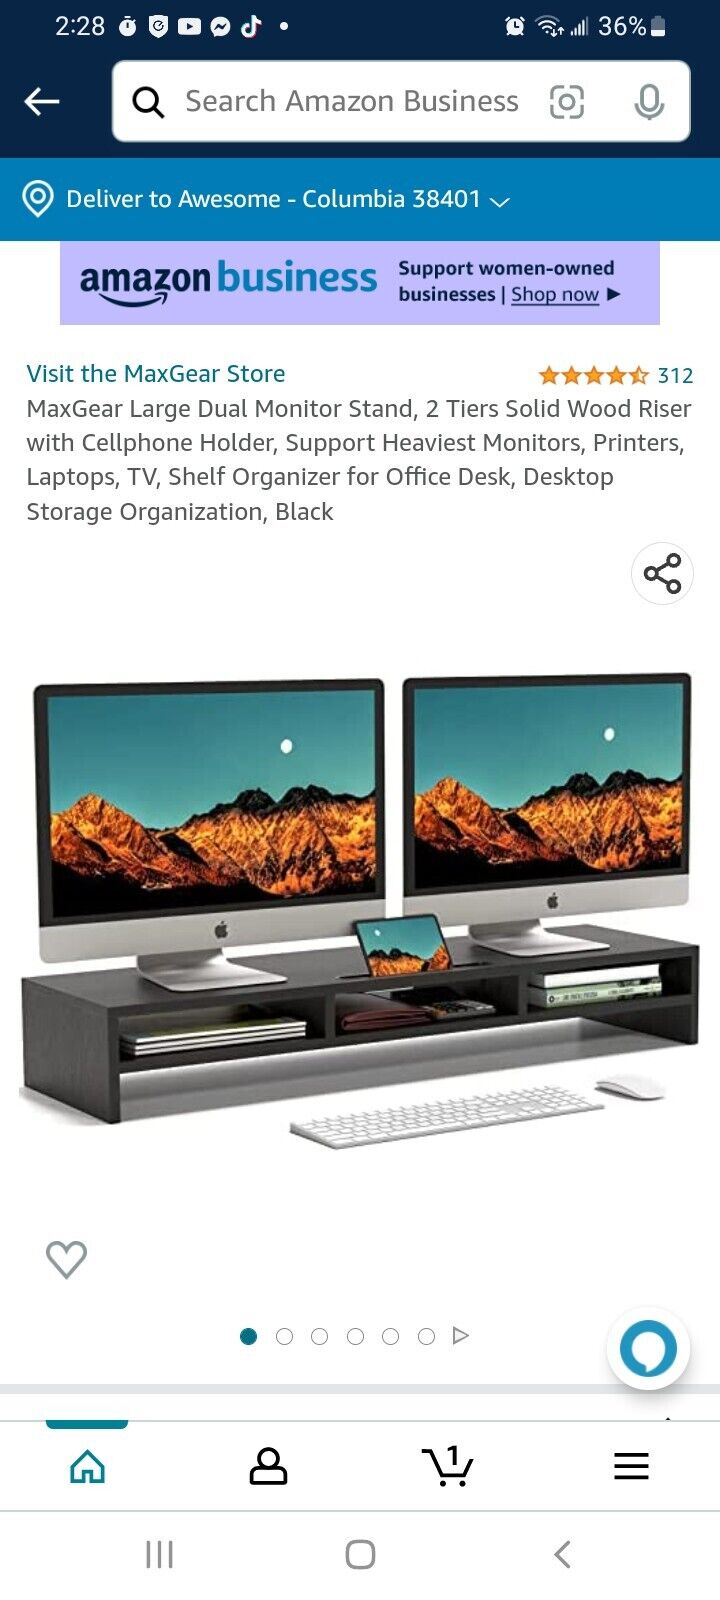 maxgear large dual monitor stand